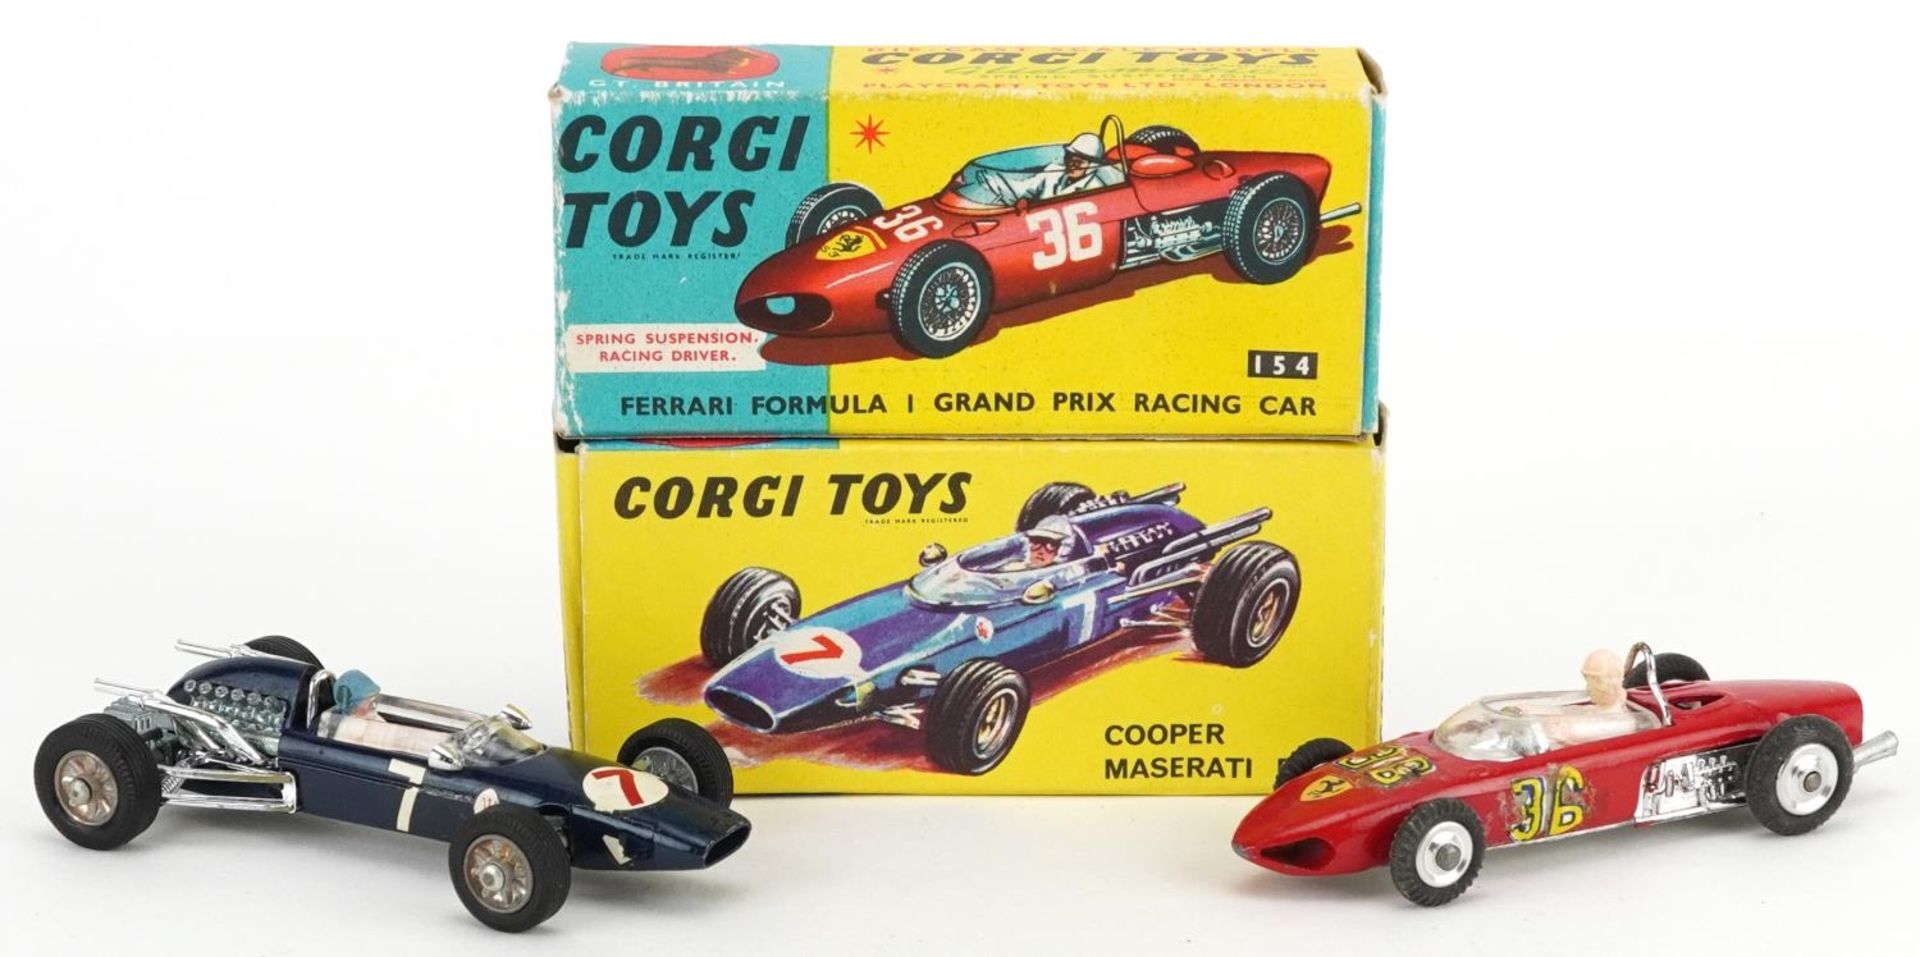 Two vintage Corgi Toys diecast racing vehicles with boxes comprising Ferrari Formula I Grand Prix